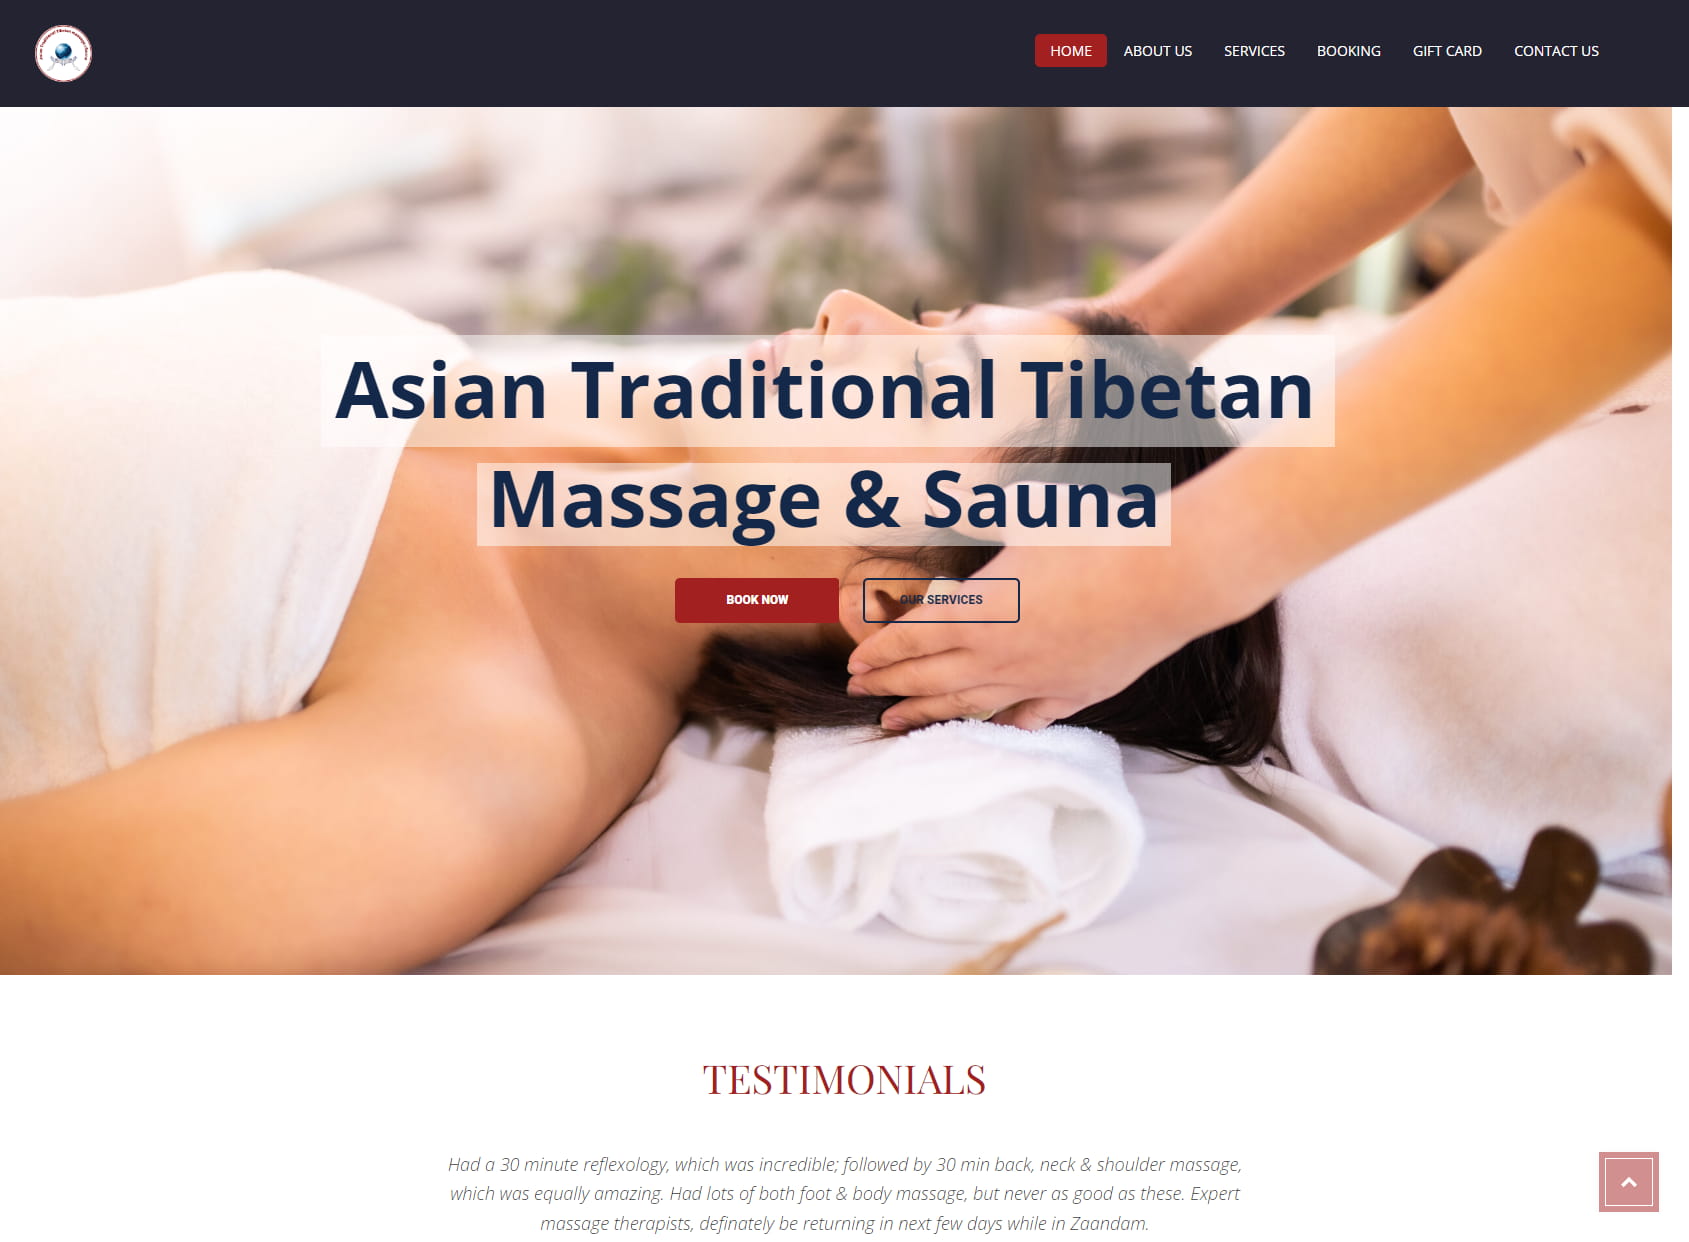 Asia Tibetan massage & Sauna